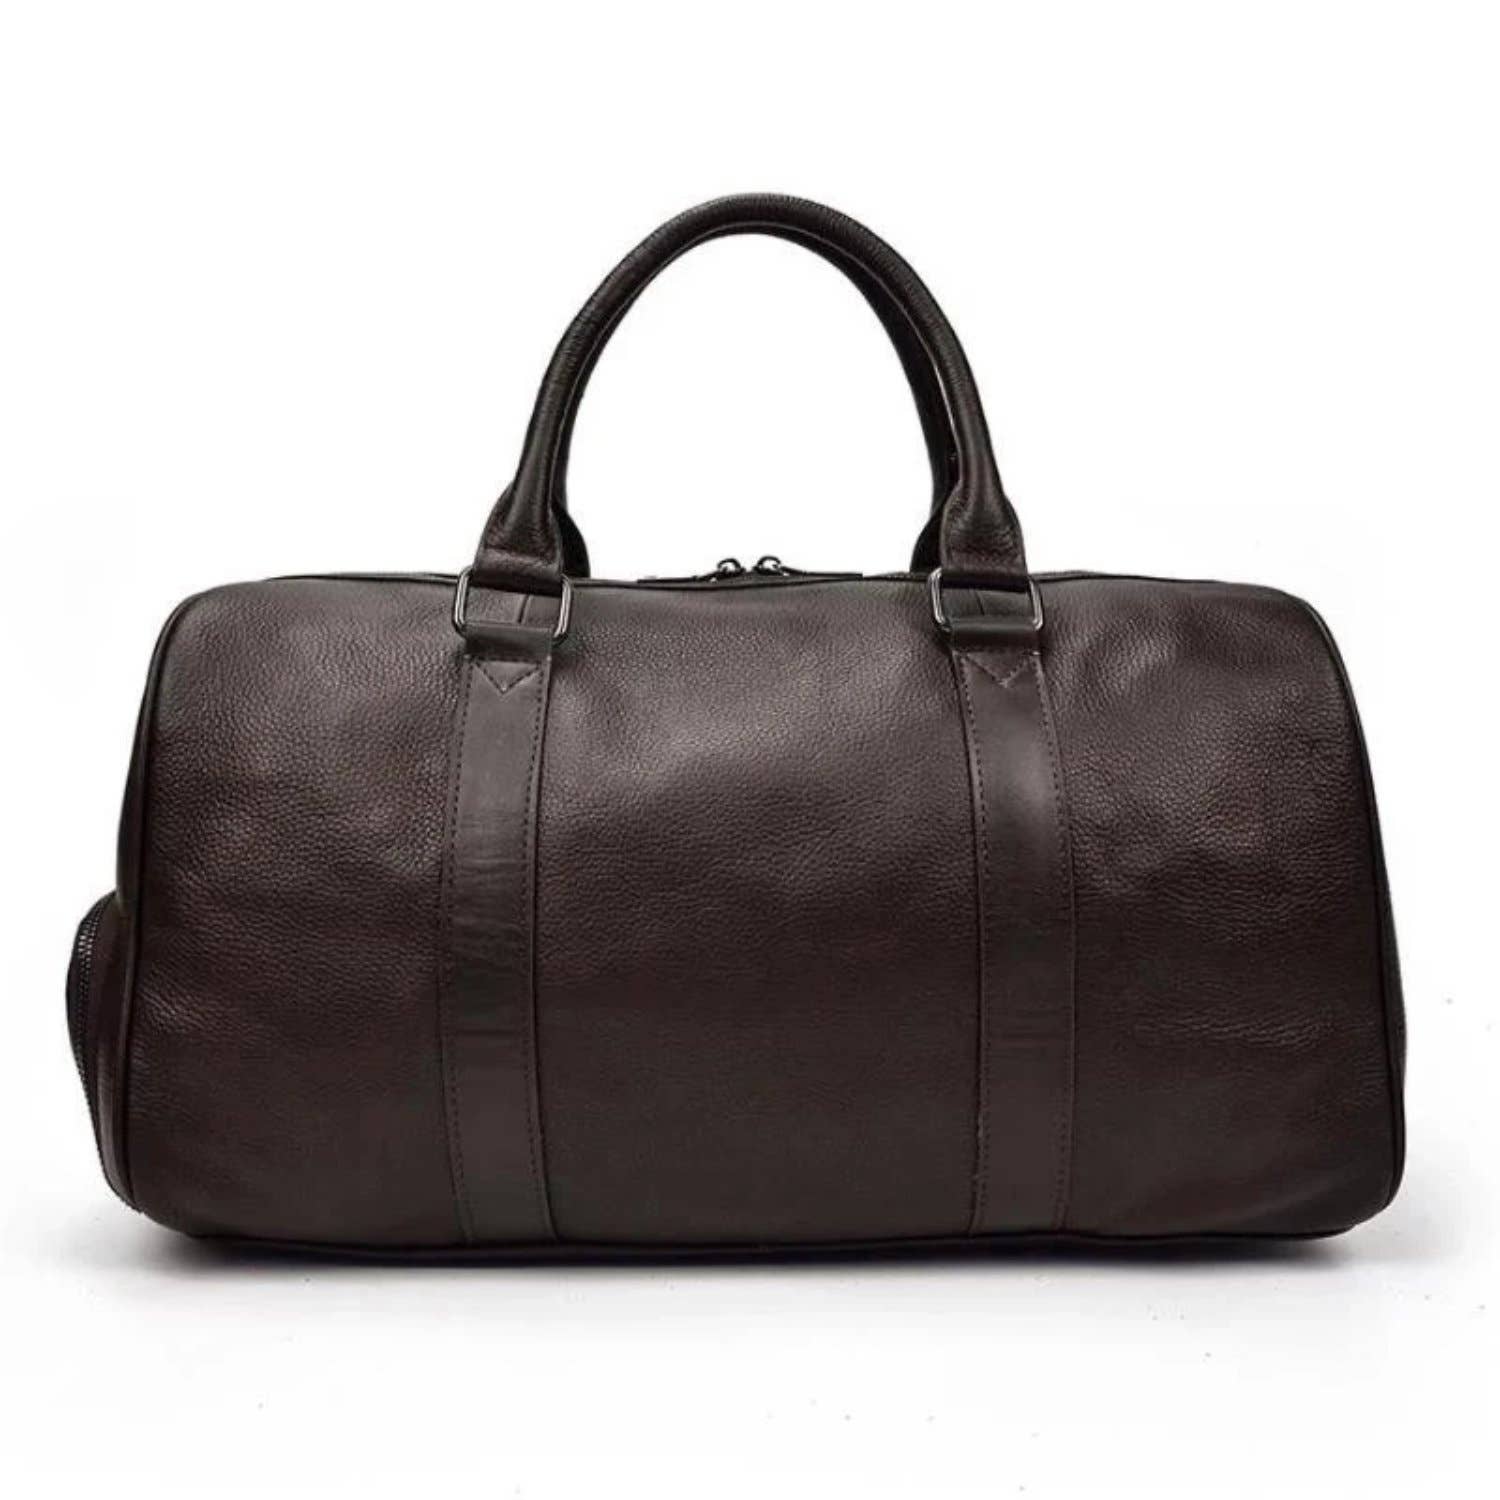 Vintage Leather Duffle Bag: Brown